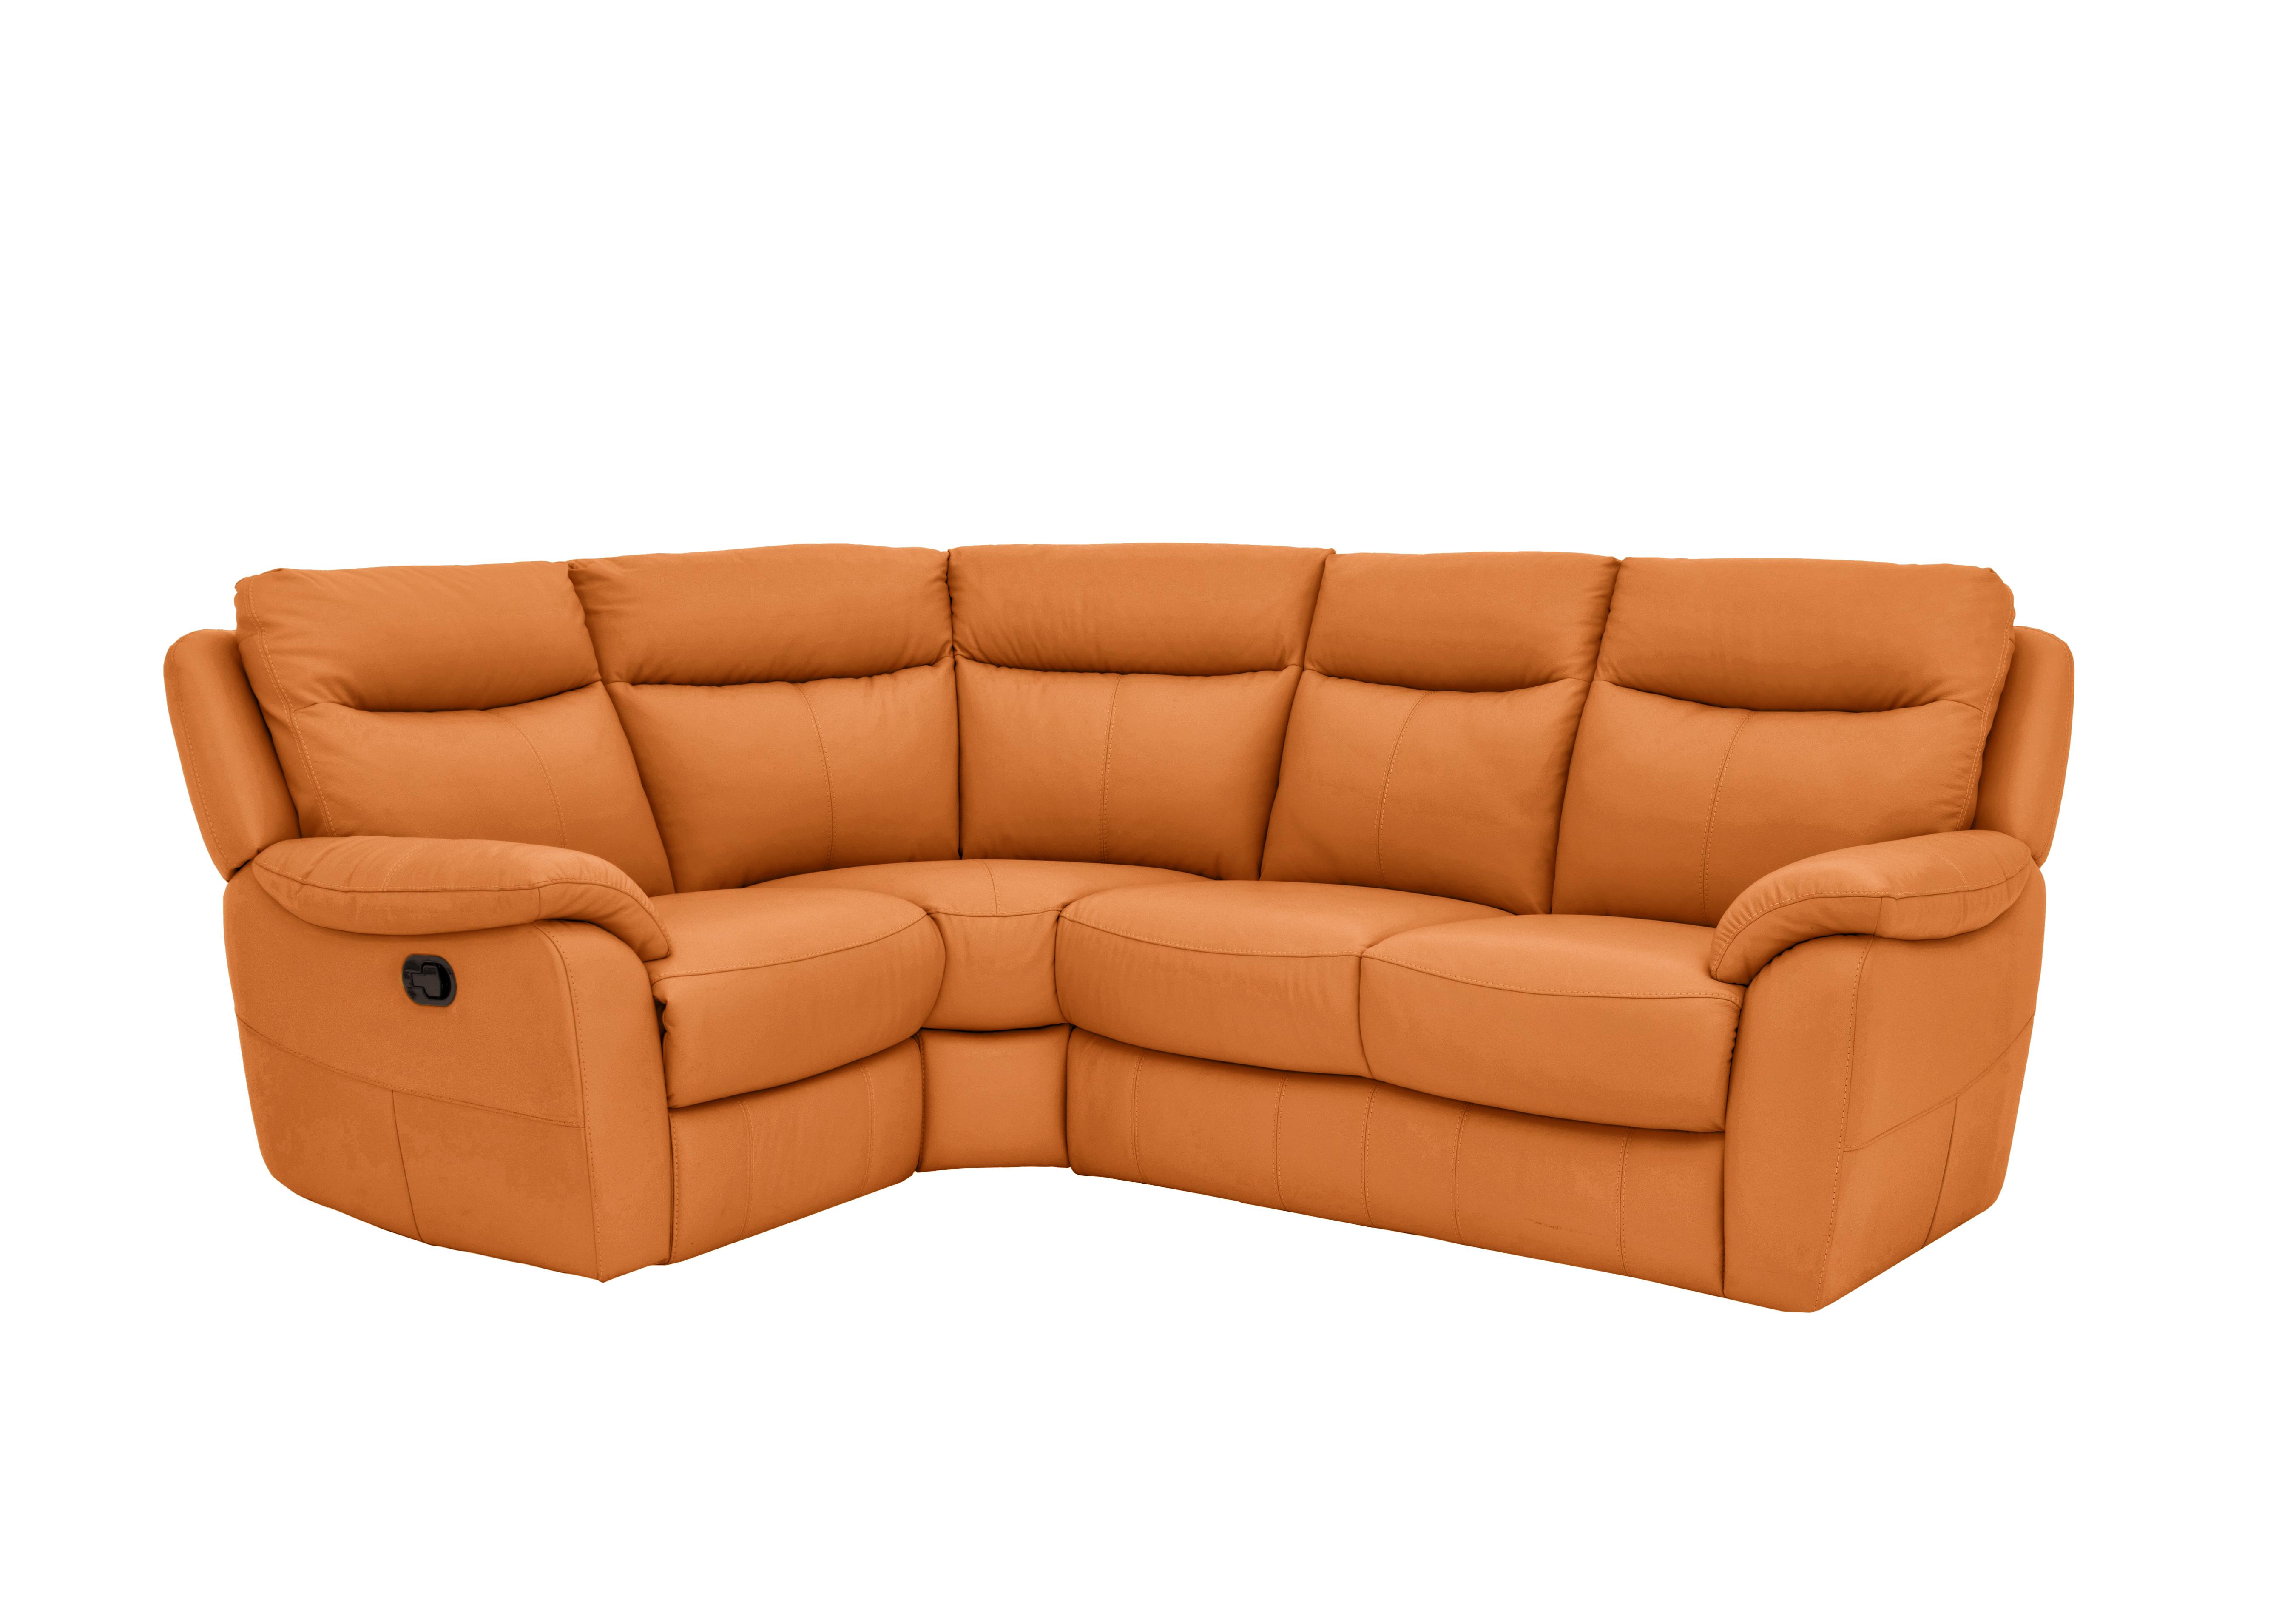 Snug Compact Leather Corner Sofa in Bv-335e Honey Yellow on Furniture Village